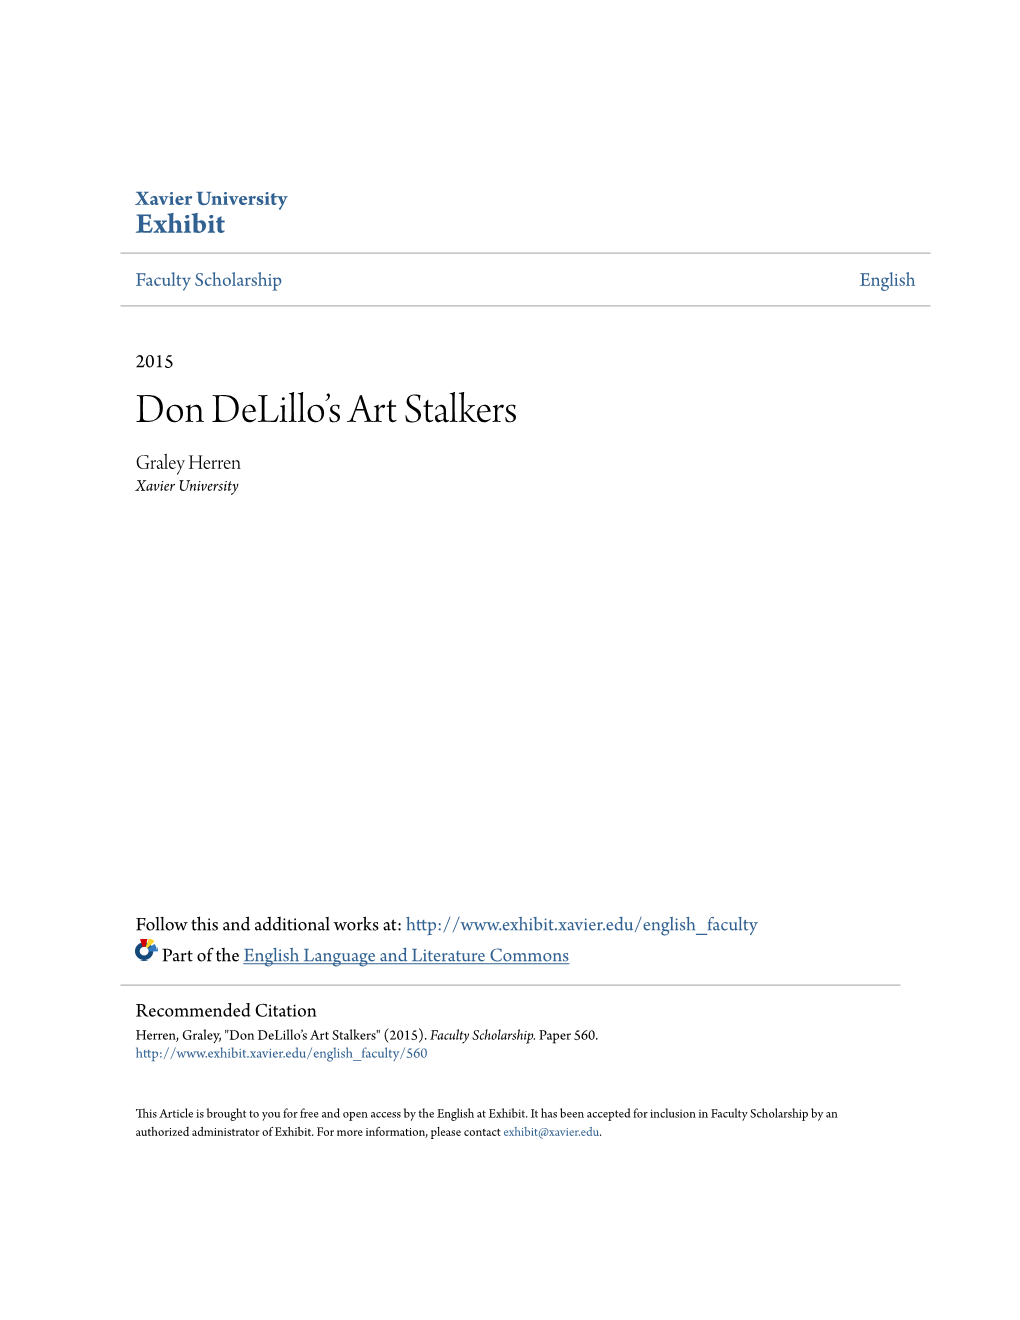 Don Delillo's Art Stalkers